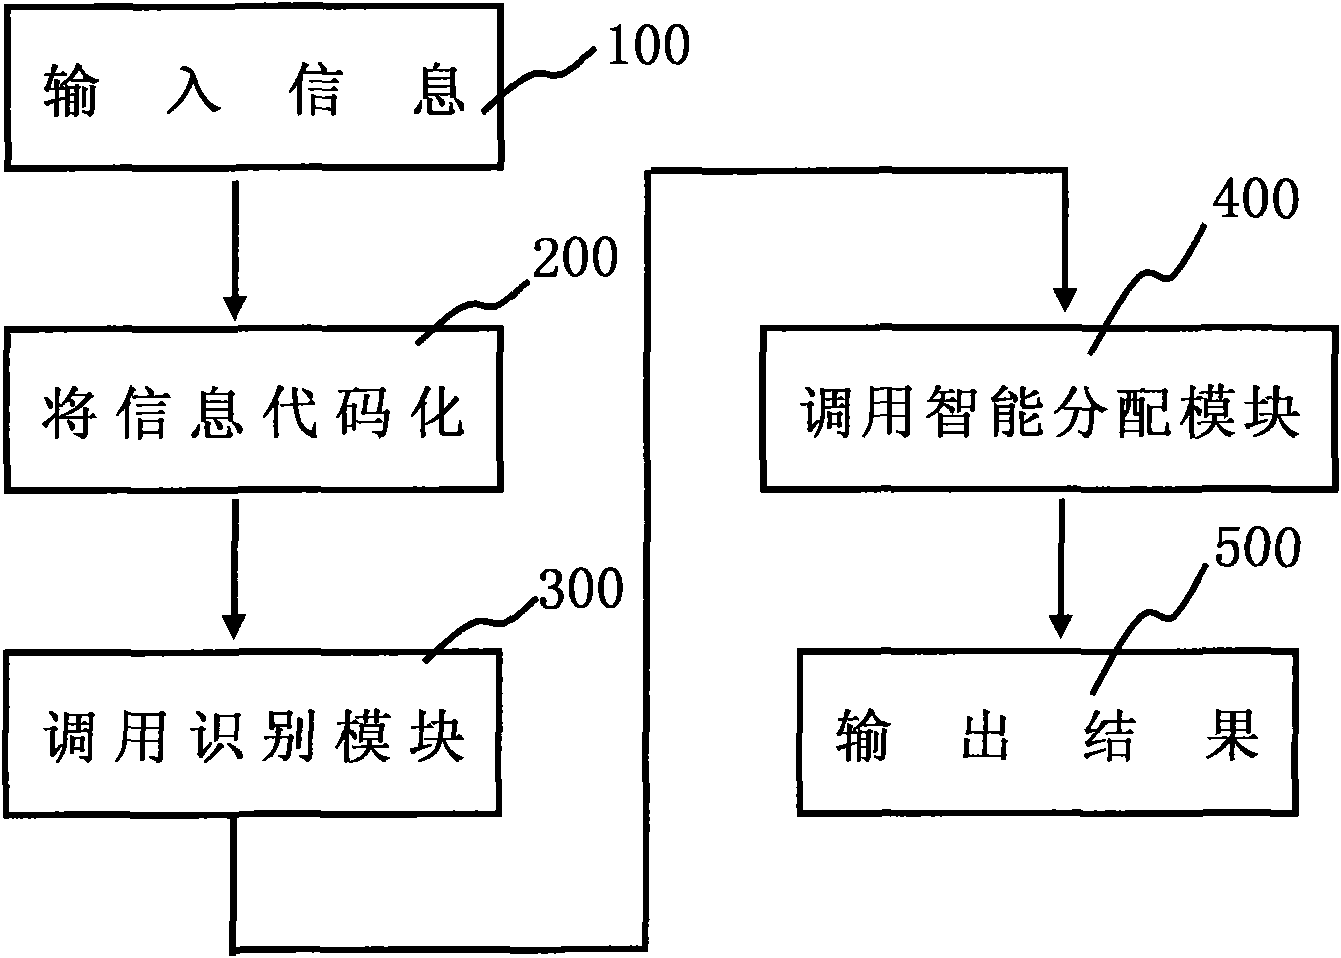 Distribution method of optical cable chromatography